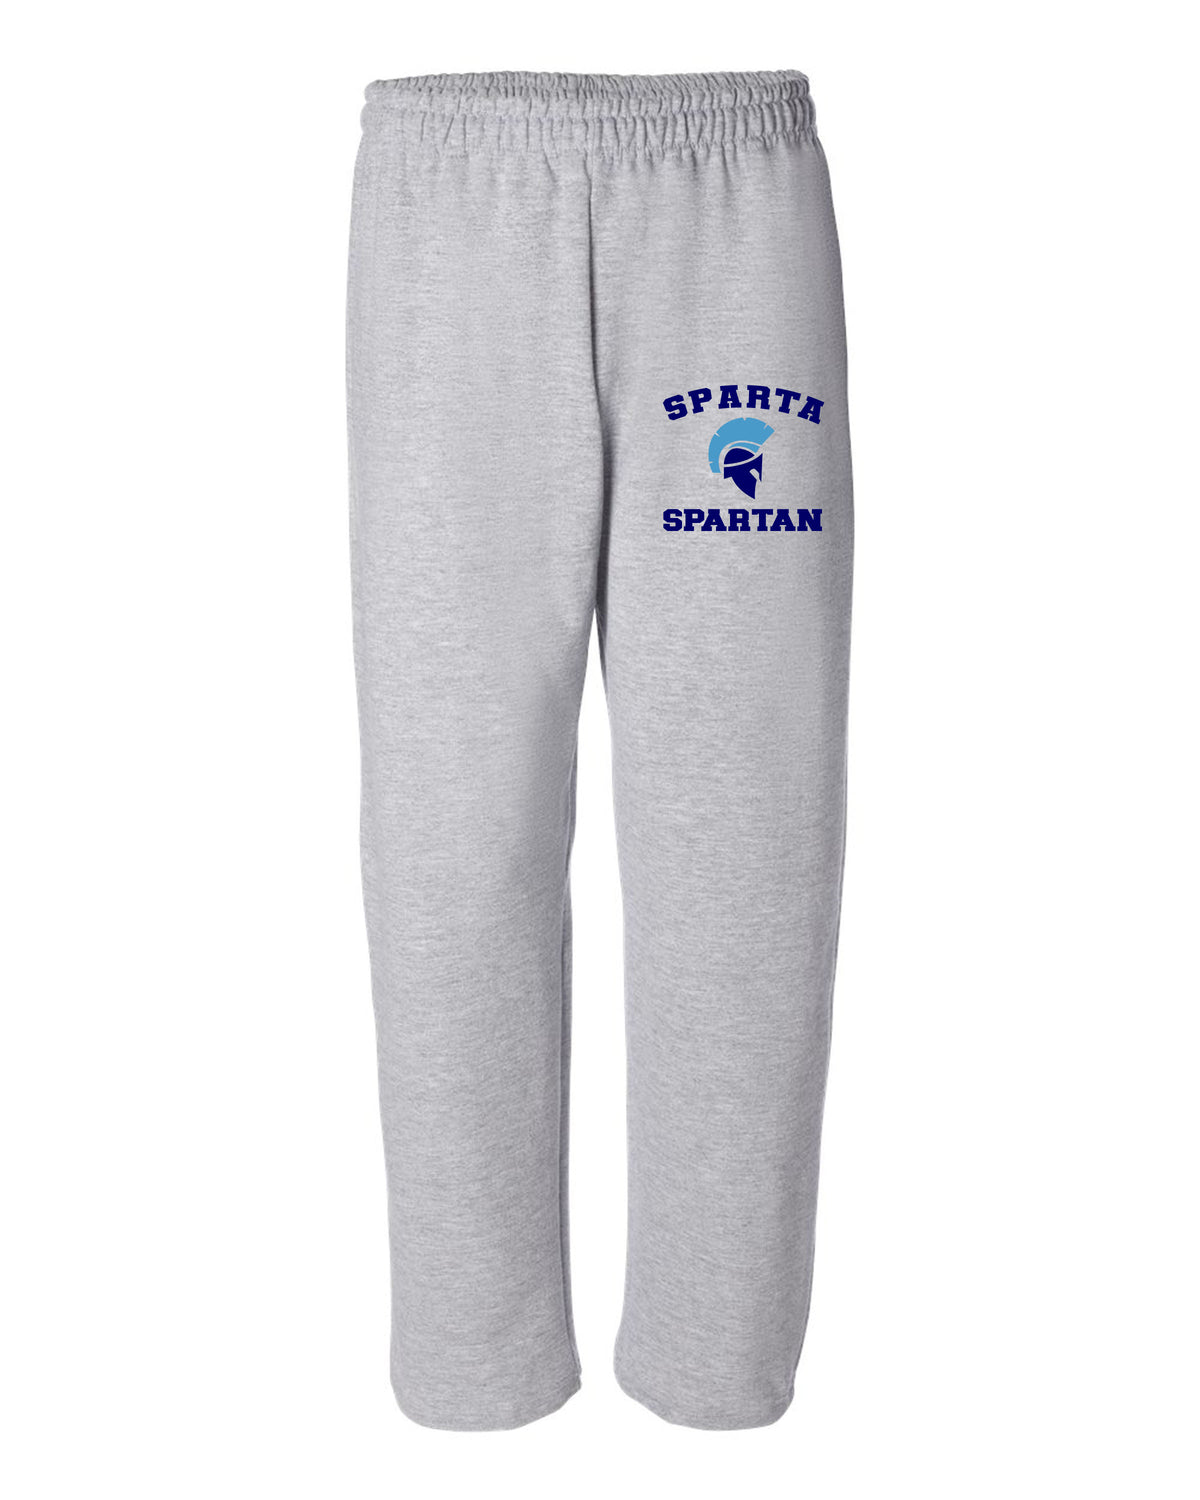 Sparta School Design 1 Open Bottom Sweatpants